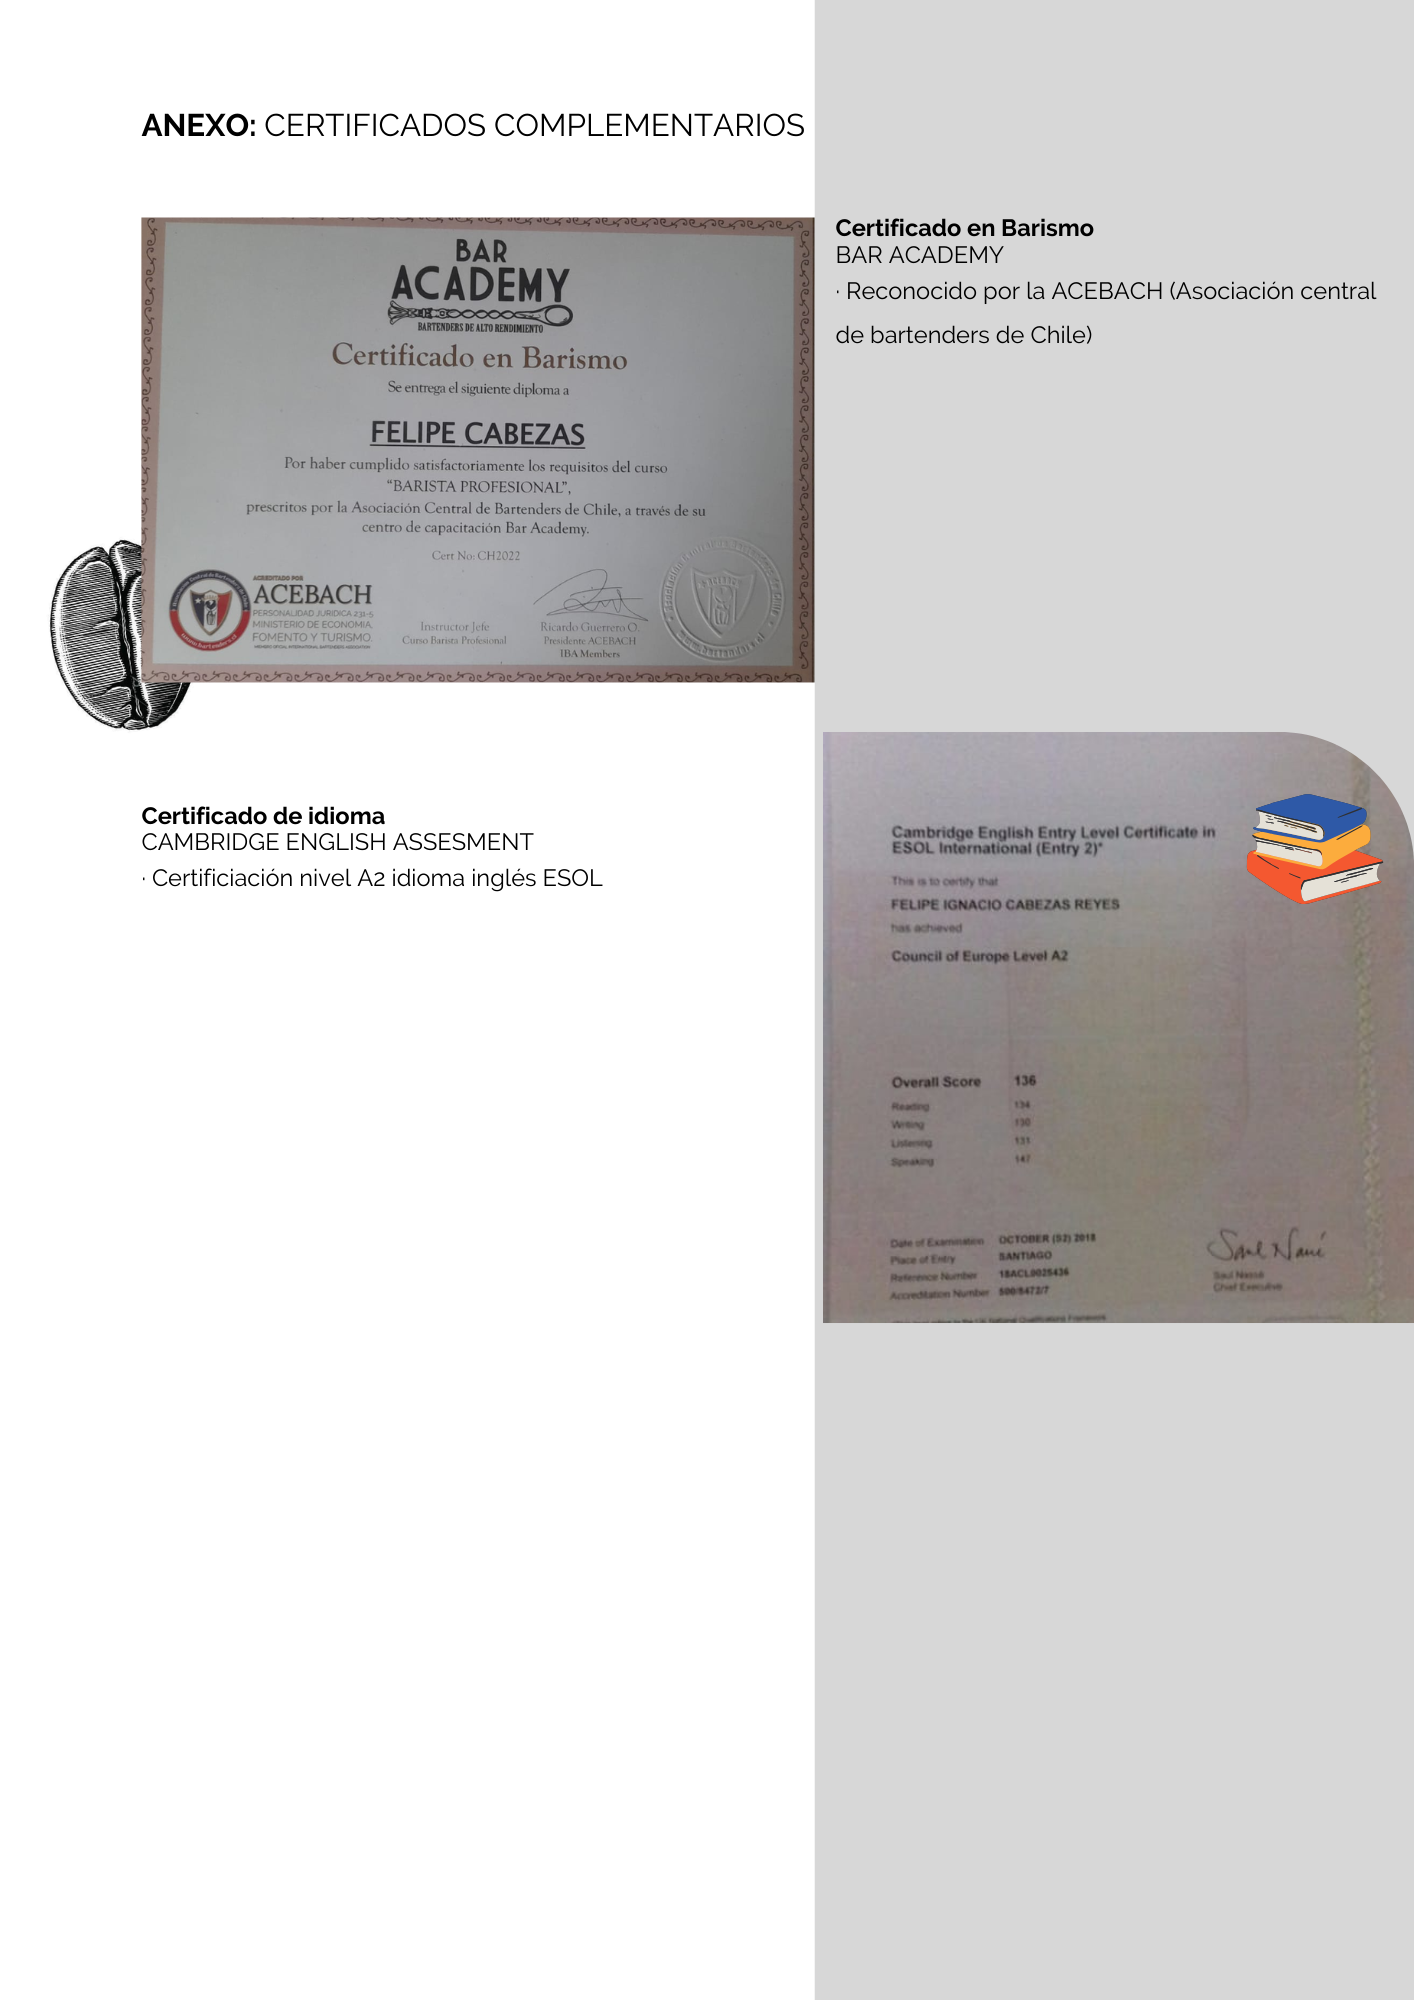 ANEXO: CERTIFICADOS COMPLEMENTARIOS

Certificado en Barismo
BAR ACADEMY

-Reconocido por la ACEBACH (Asociacion central
de bartenders de Chile)

       
 

Certificado de idioma
CAMBRIDGE ENGLISH ASSESMENT

Certificiacion nivel A2 idioma ingles ESOL